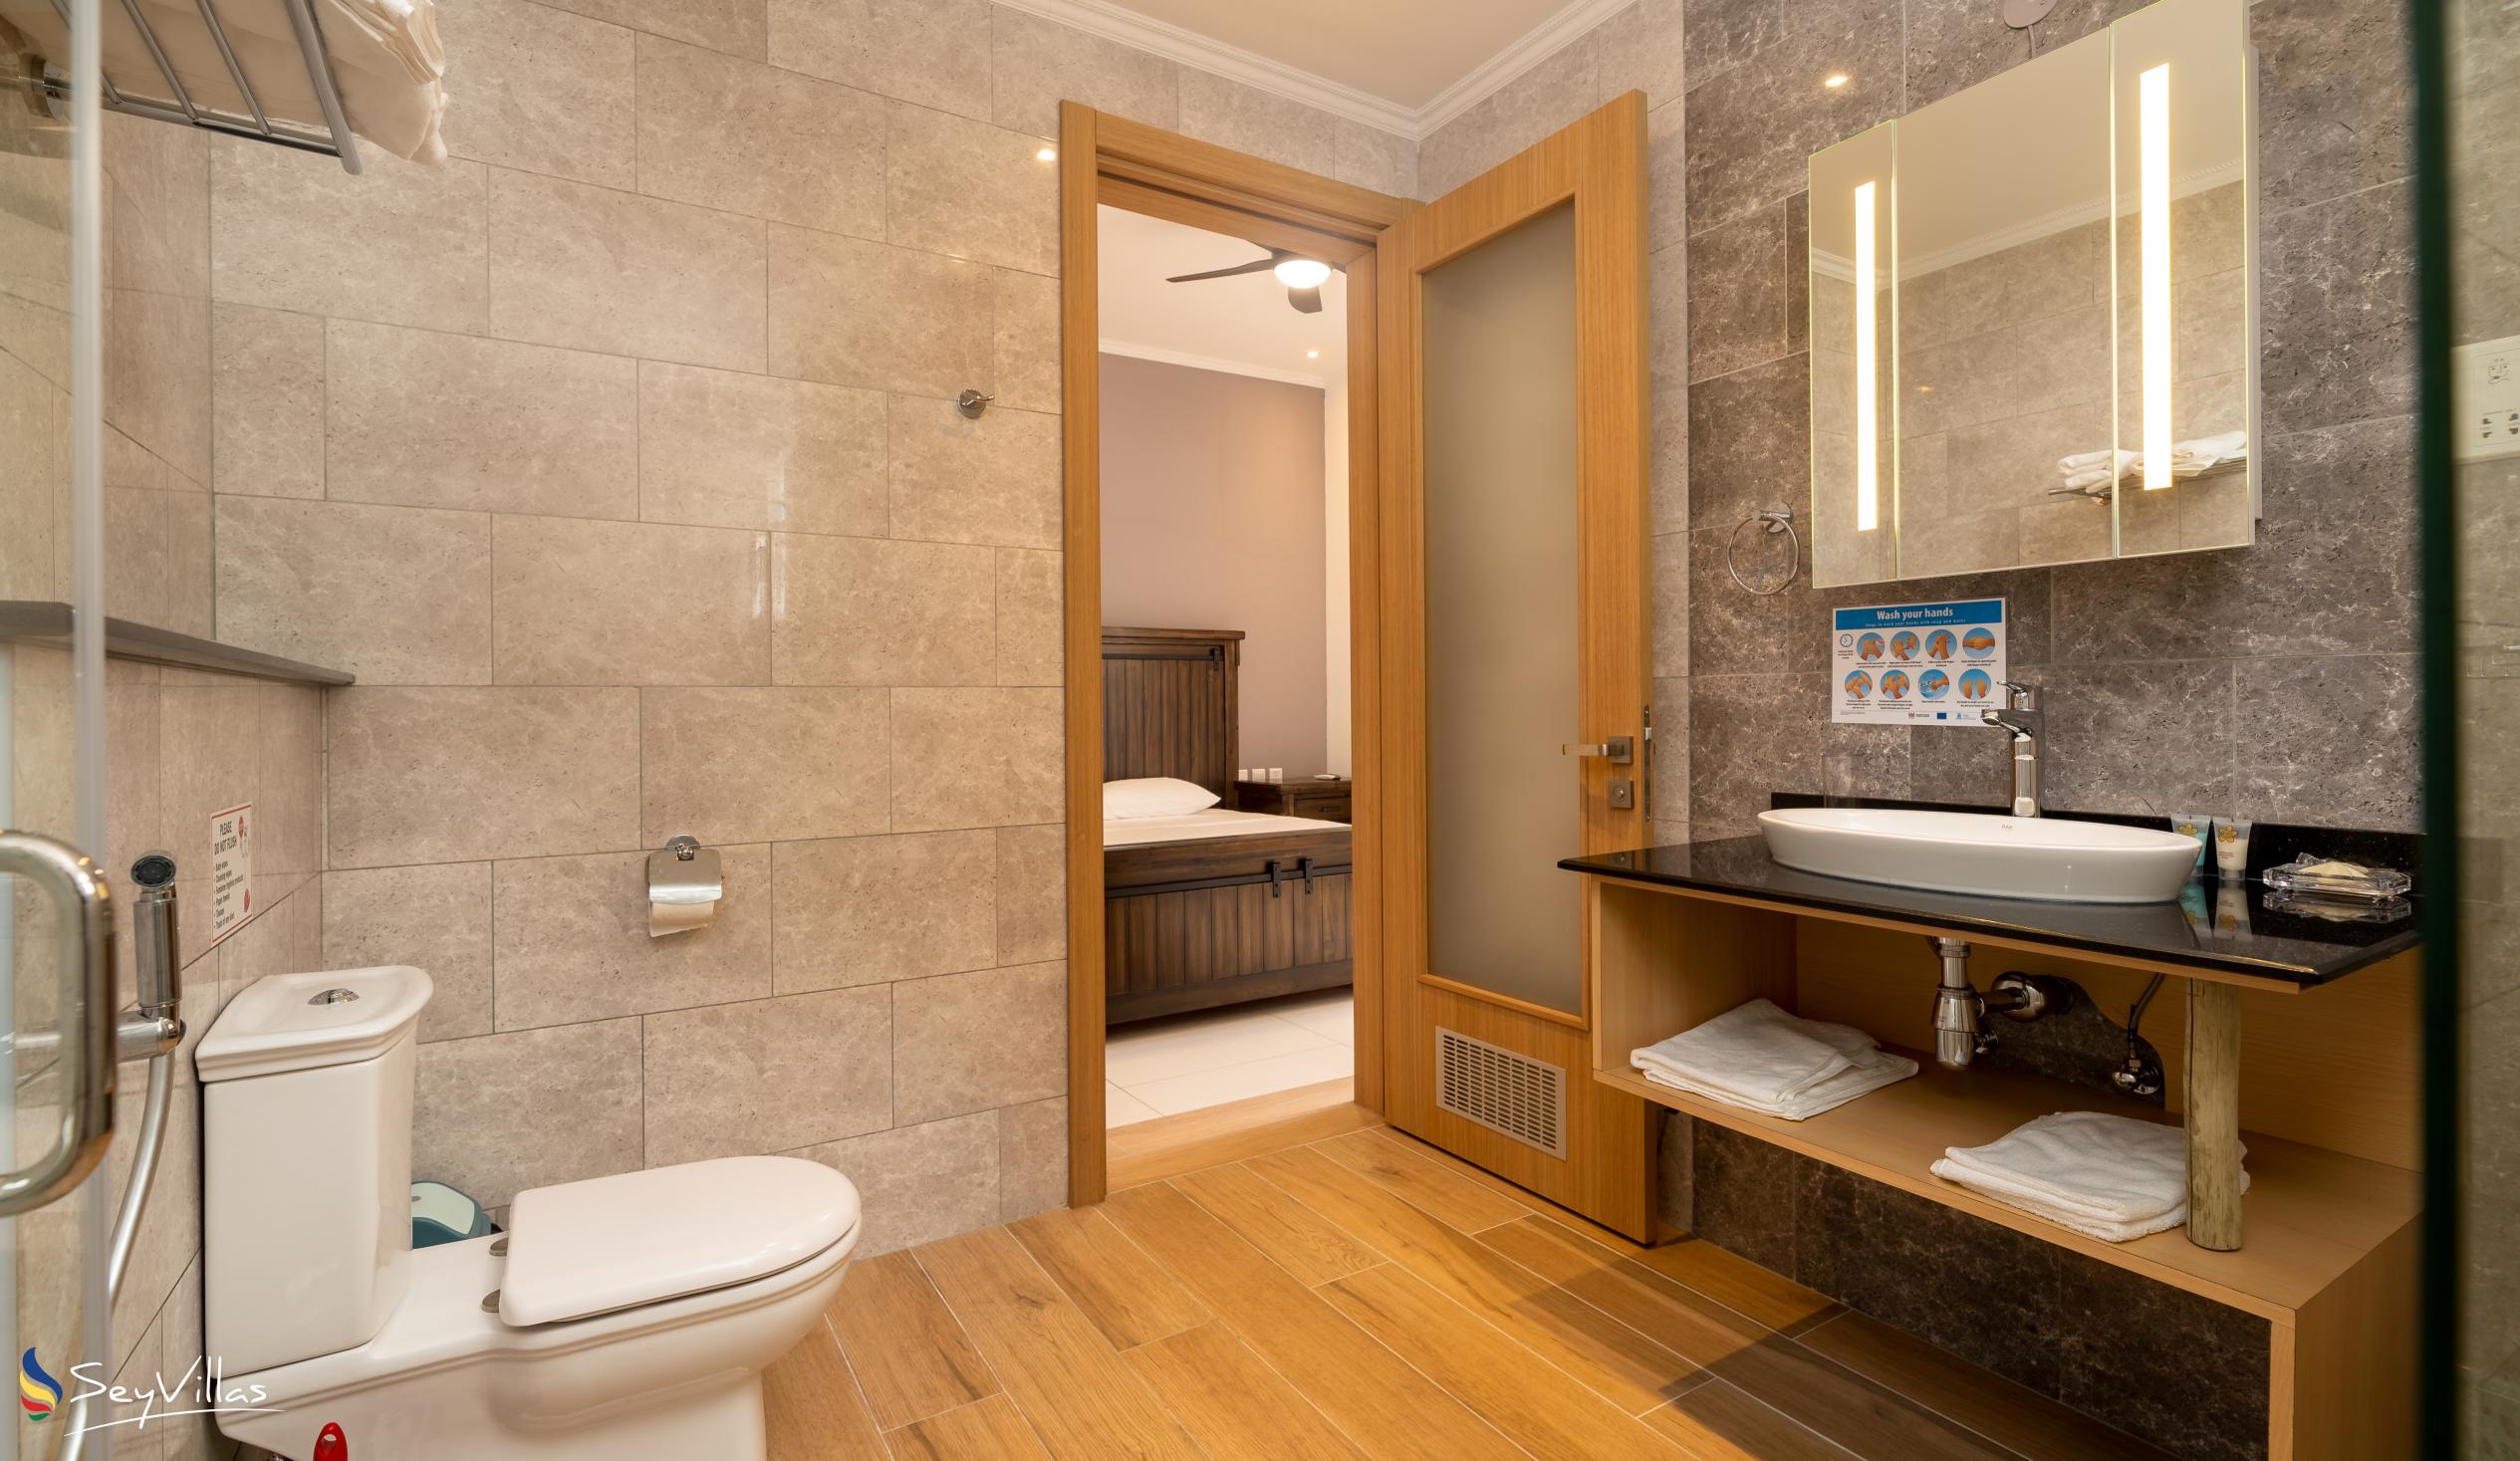 Foto 35: Royale Suites by Arc Royale Luxury Apartments - Appartamento con 2 camere - Mahé (Seychelles)